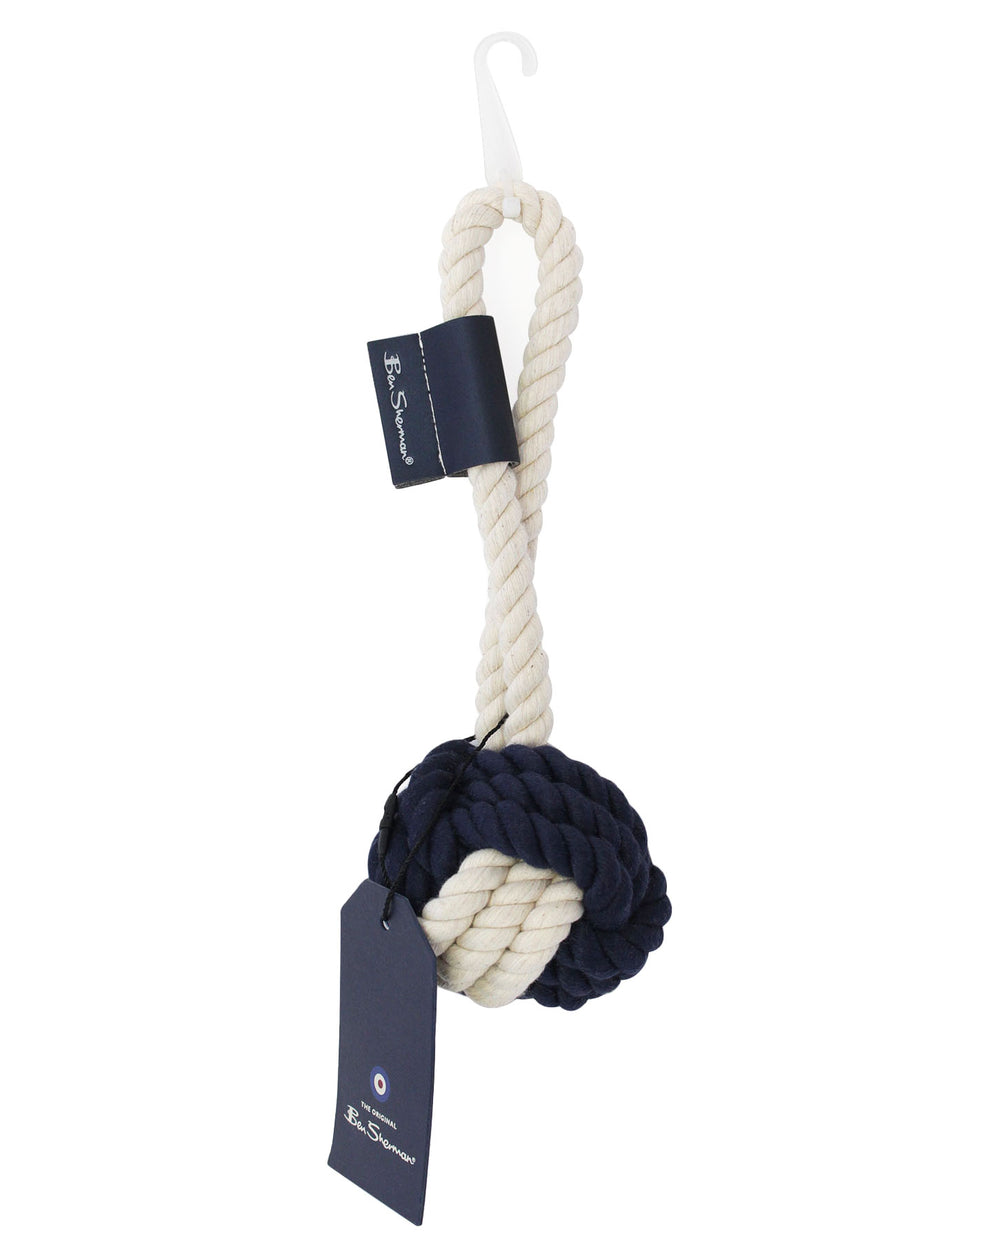 Medium Rope Ball with Loop Dog Toy - Navy & Cream